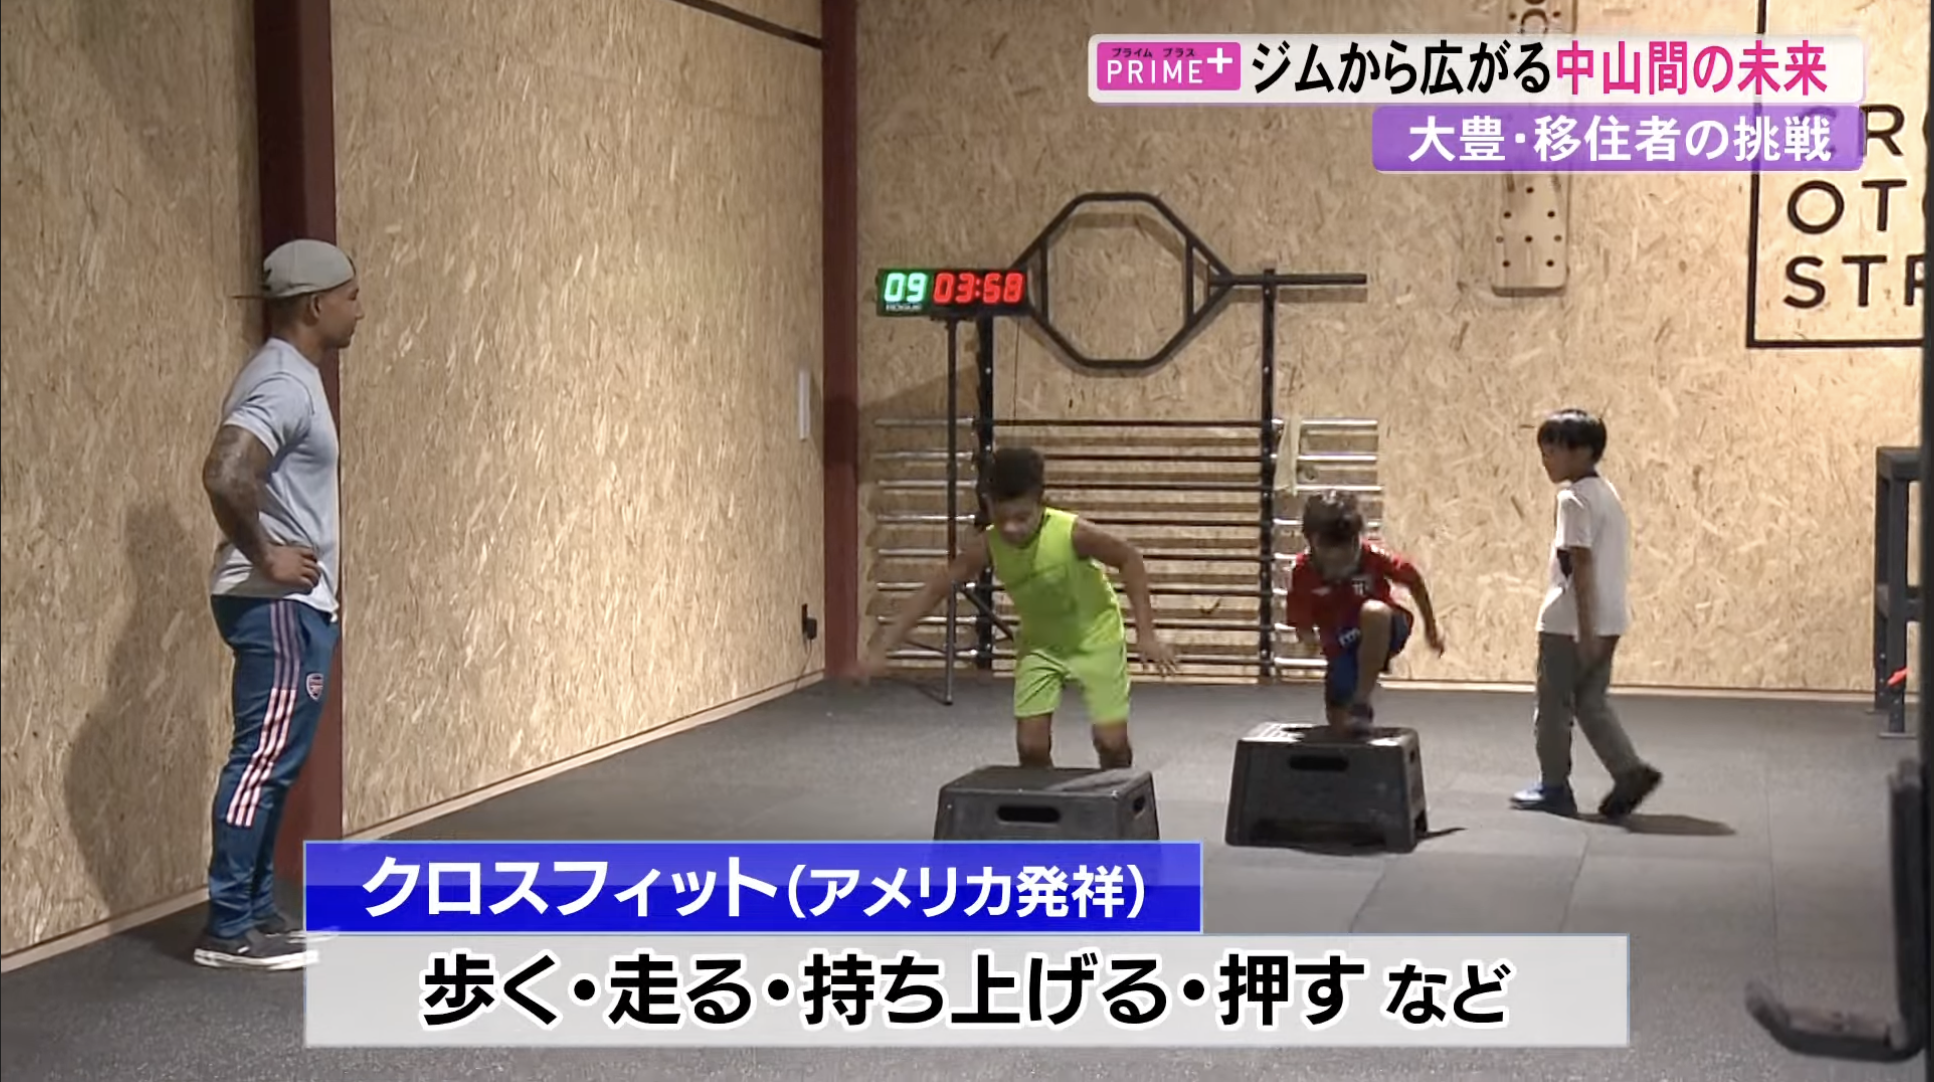 CrossFit Otoyo Strength interviewed by Kochi San San TV